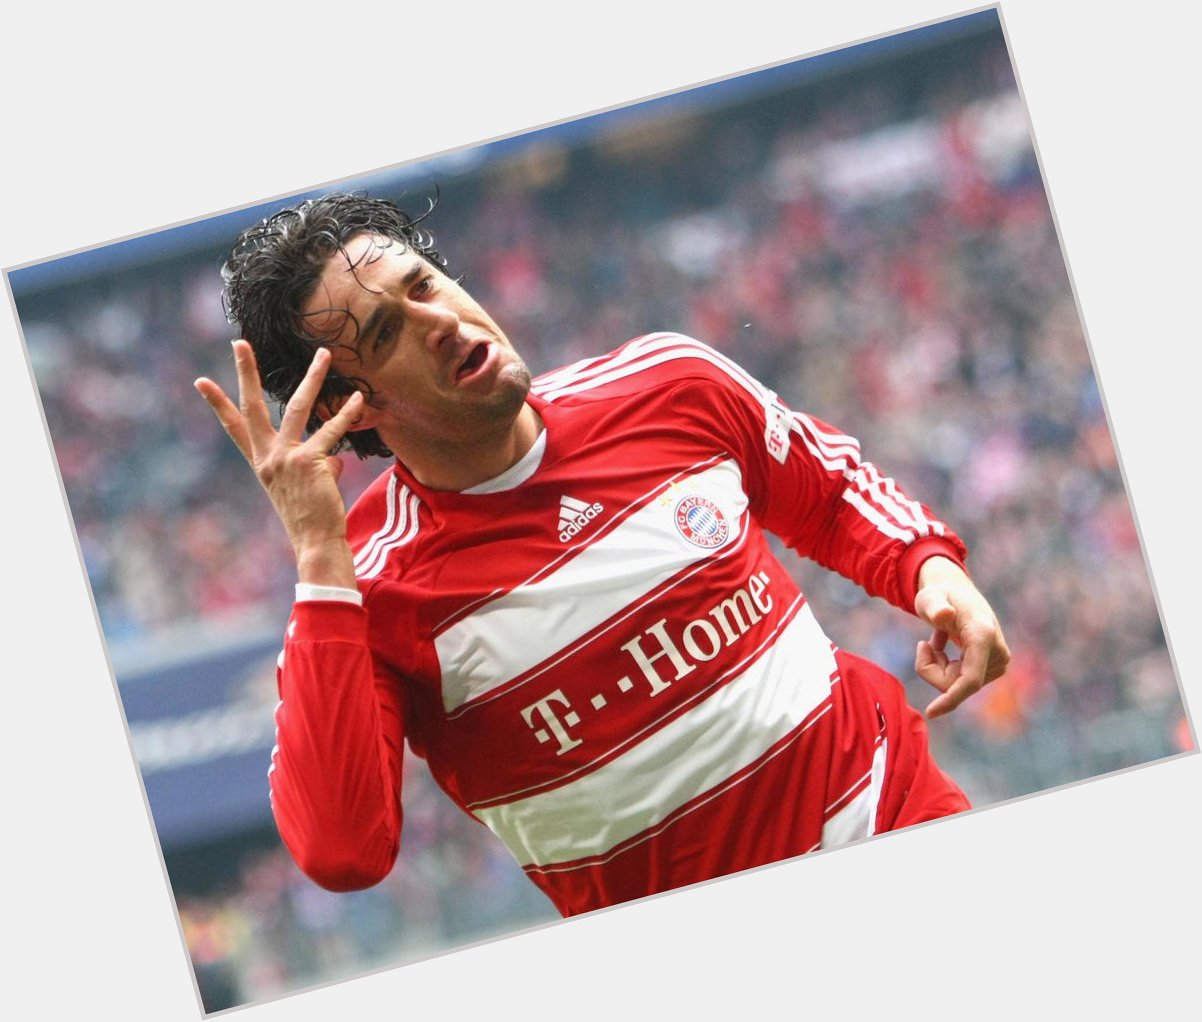 Happy 40th Birthday to former Bayern striker Luca Toni! 